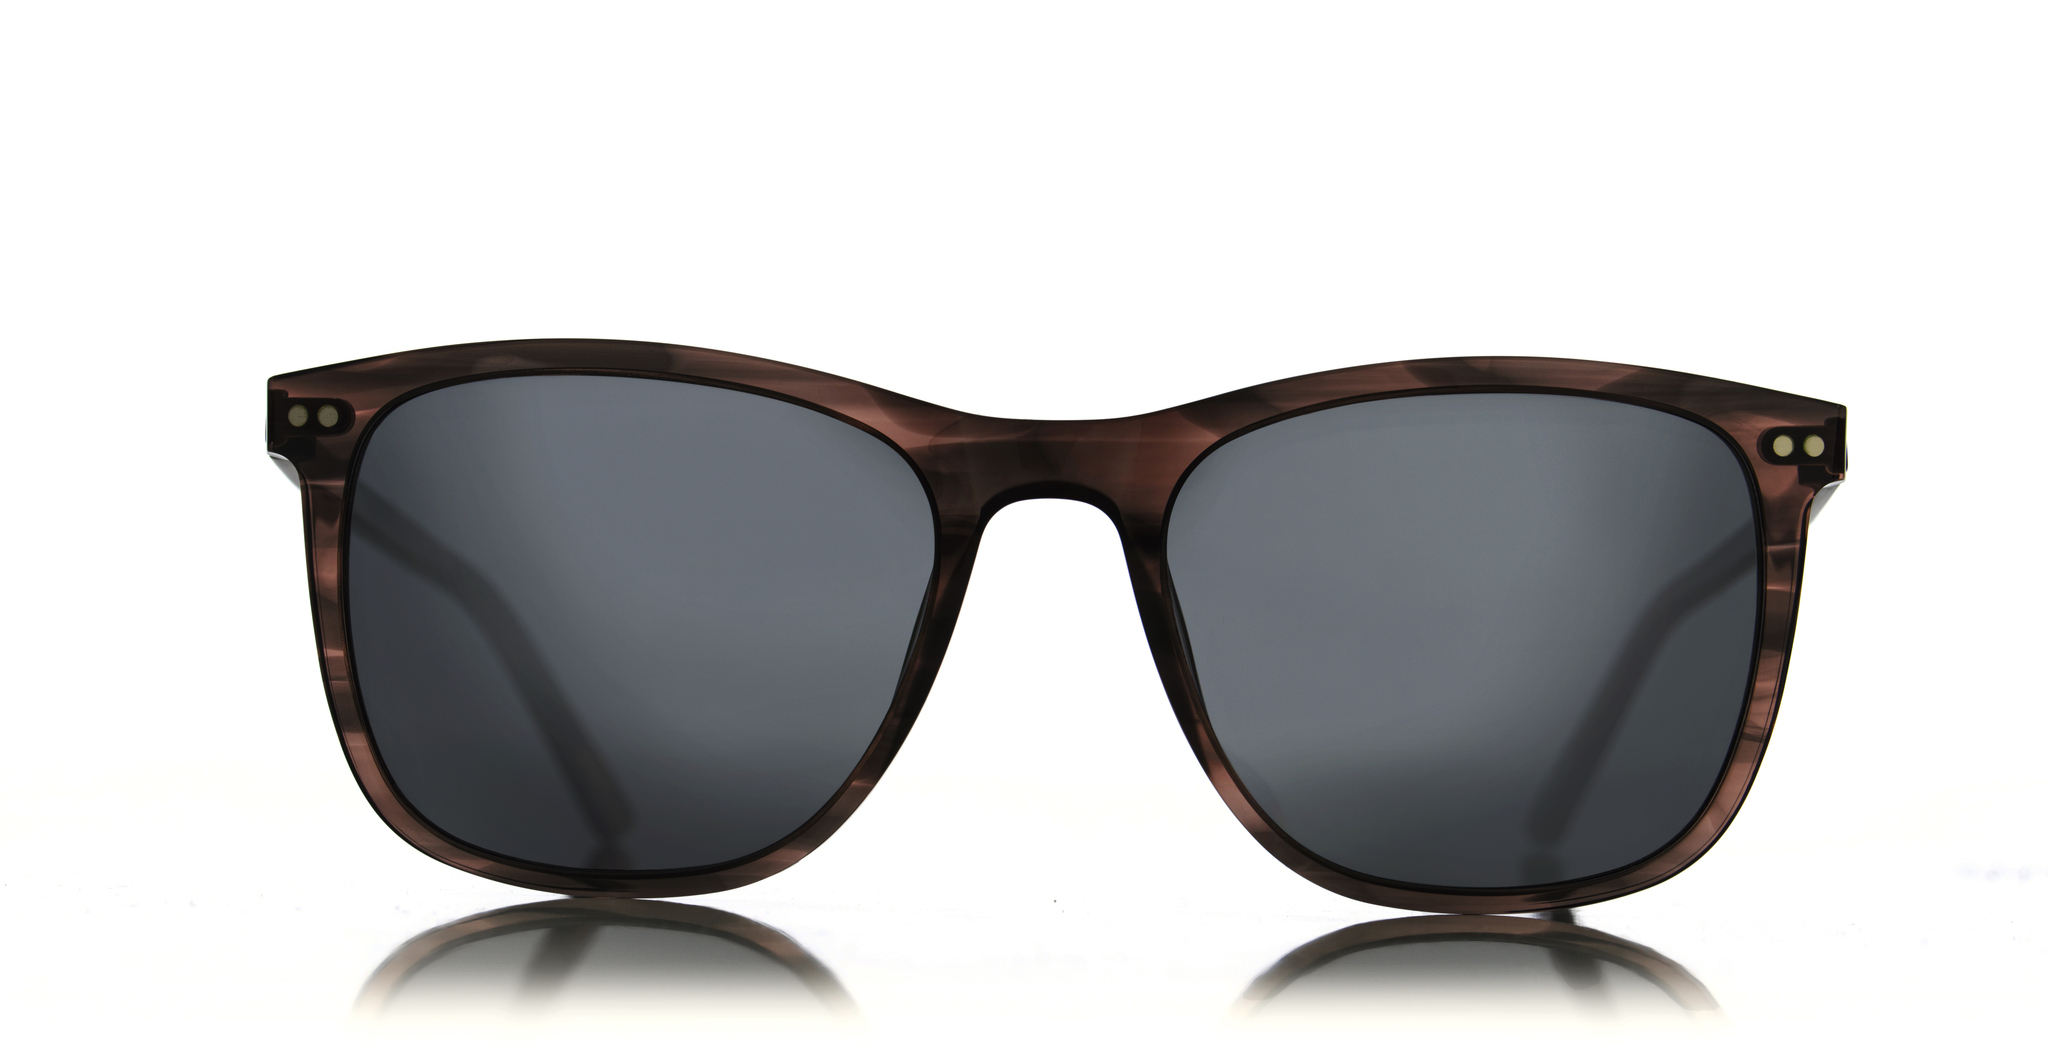 Henrik Stenson Eyewear Daylight 3.0 solglasögon Shiny Brown Greyhorn